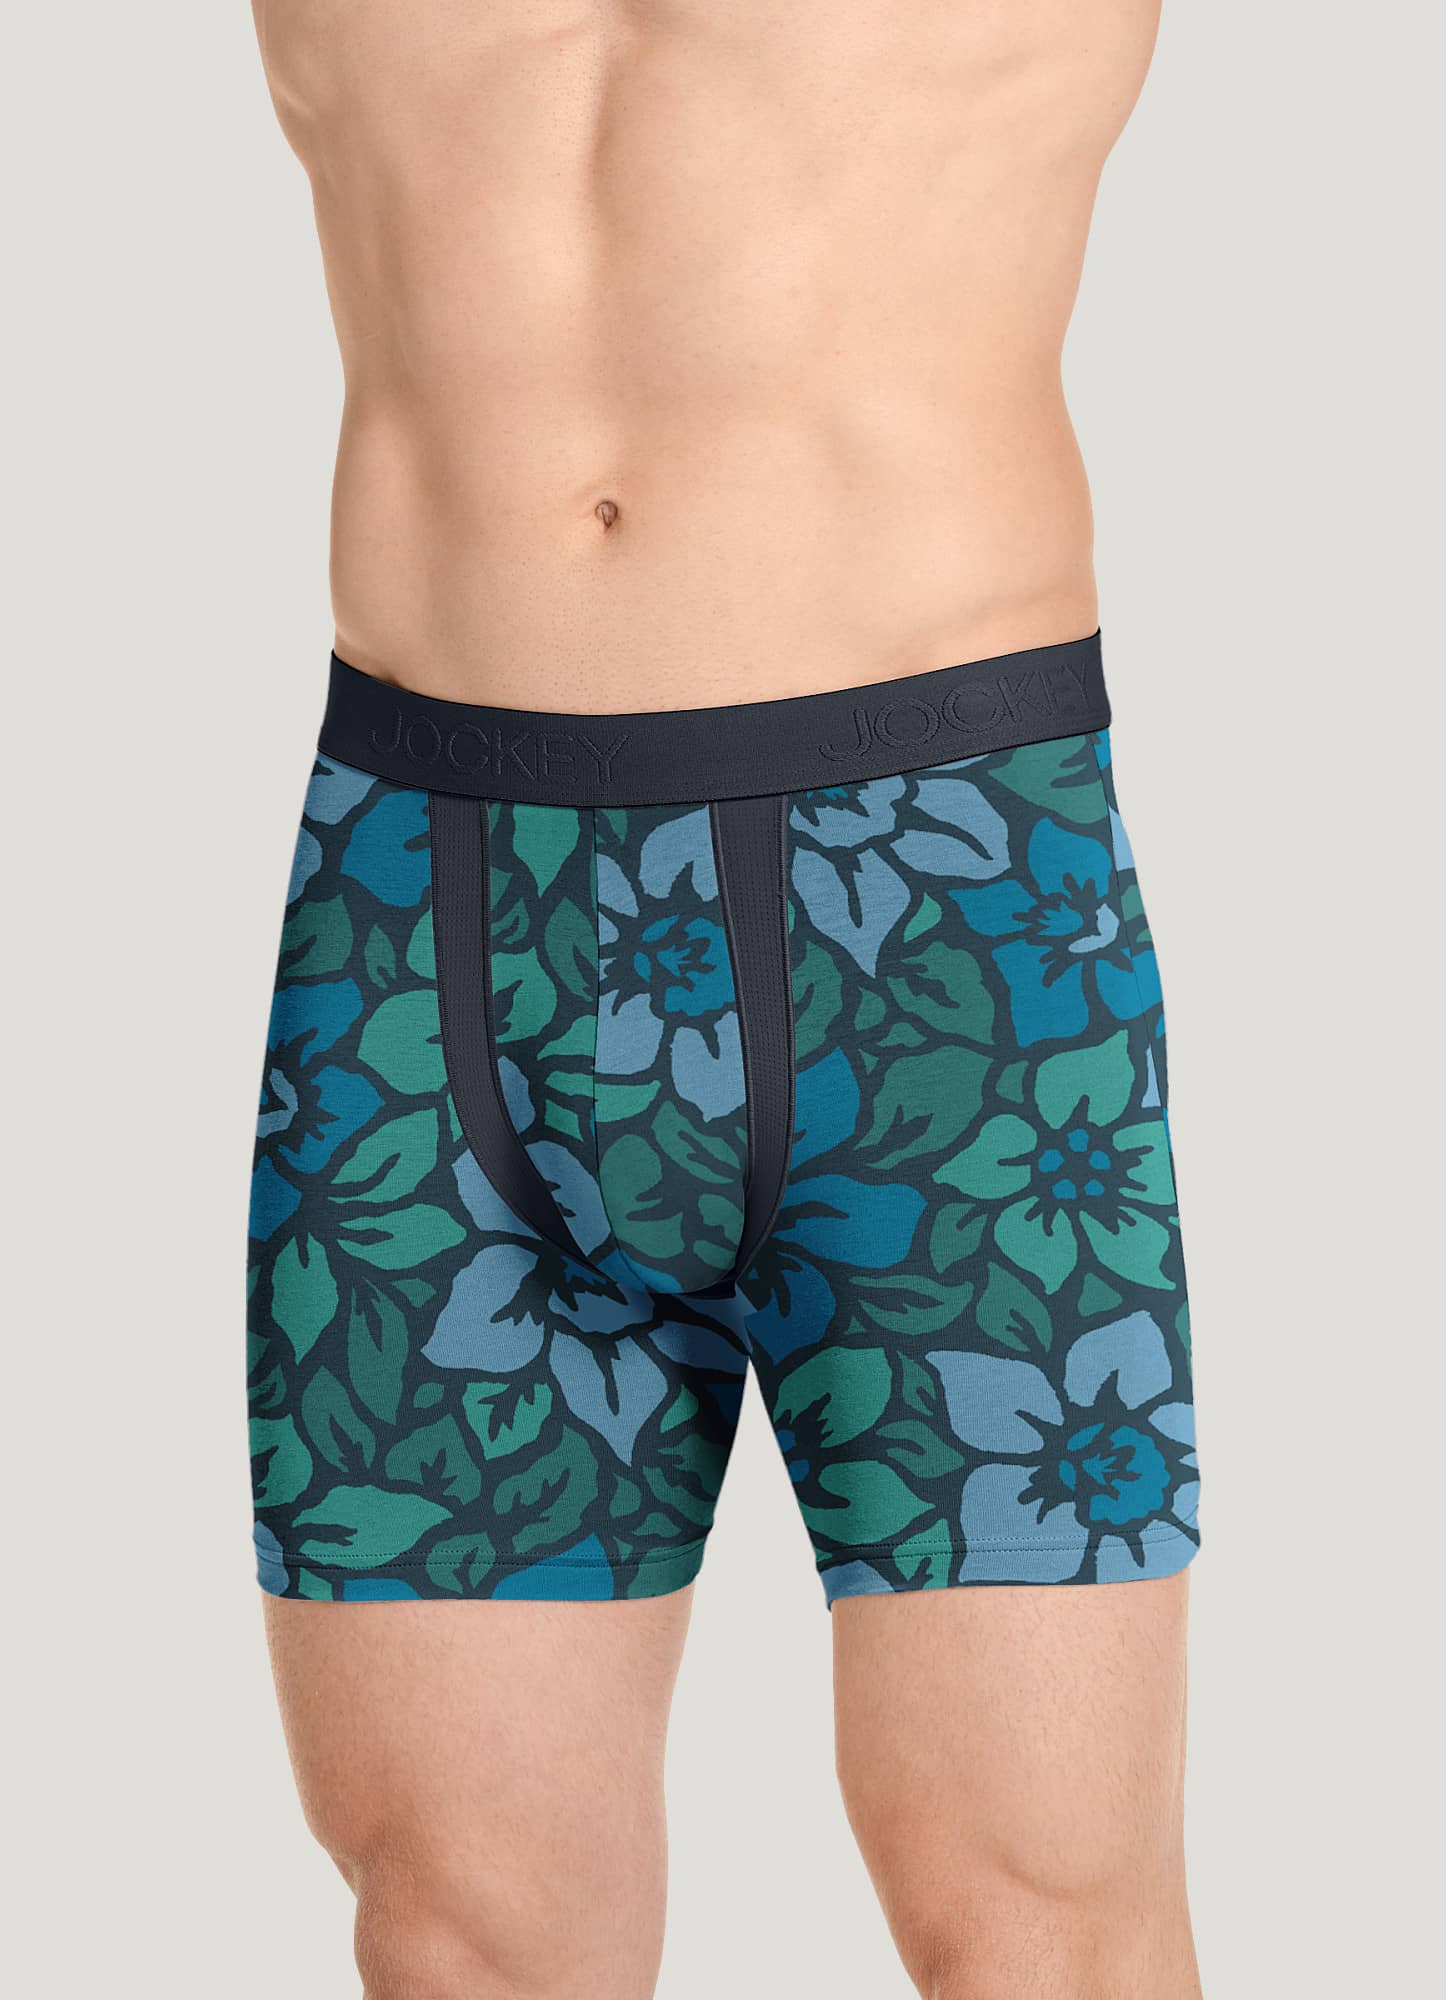 Shop Fashion Large Hole Transparent for Men Low Waist Stretch Mesh Underwear  Breathable Solid Shorts Online